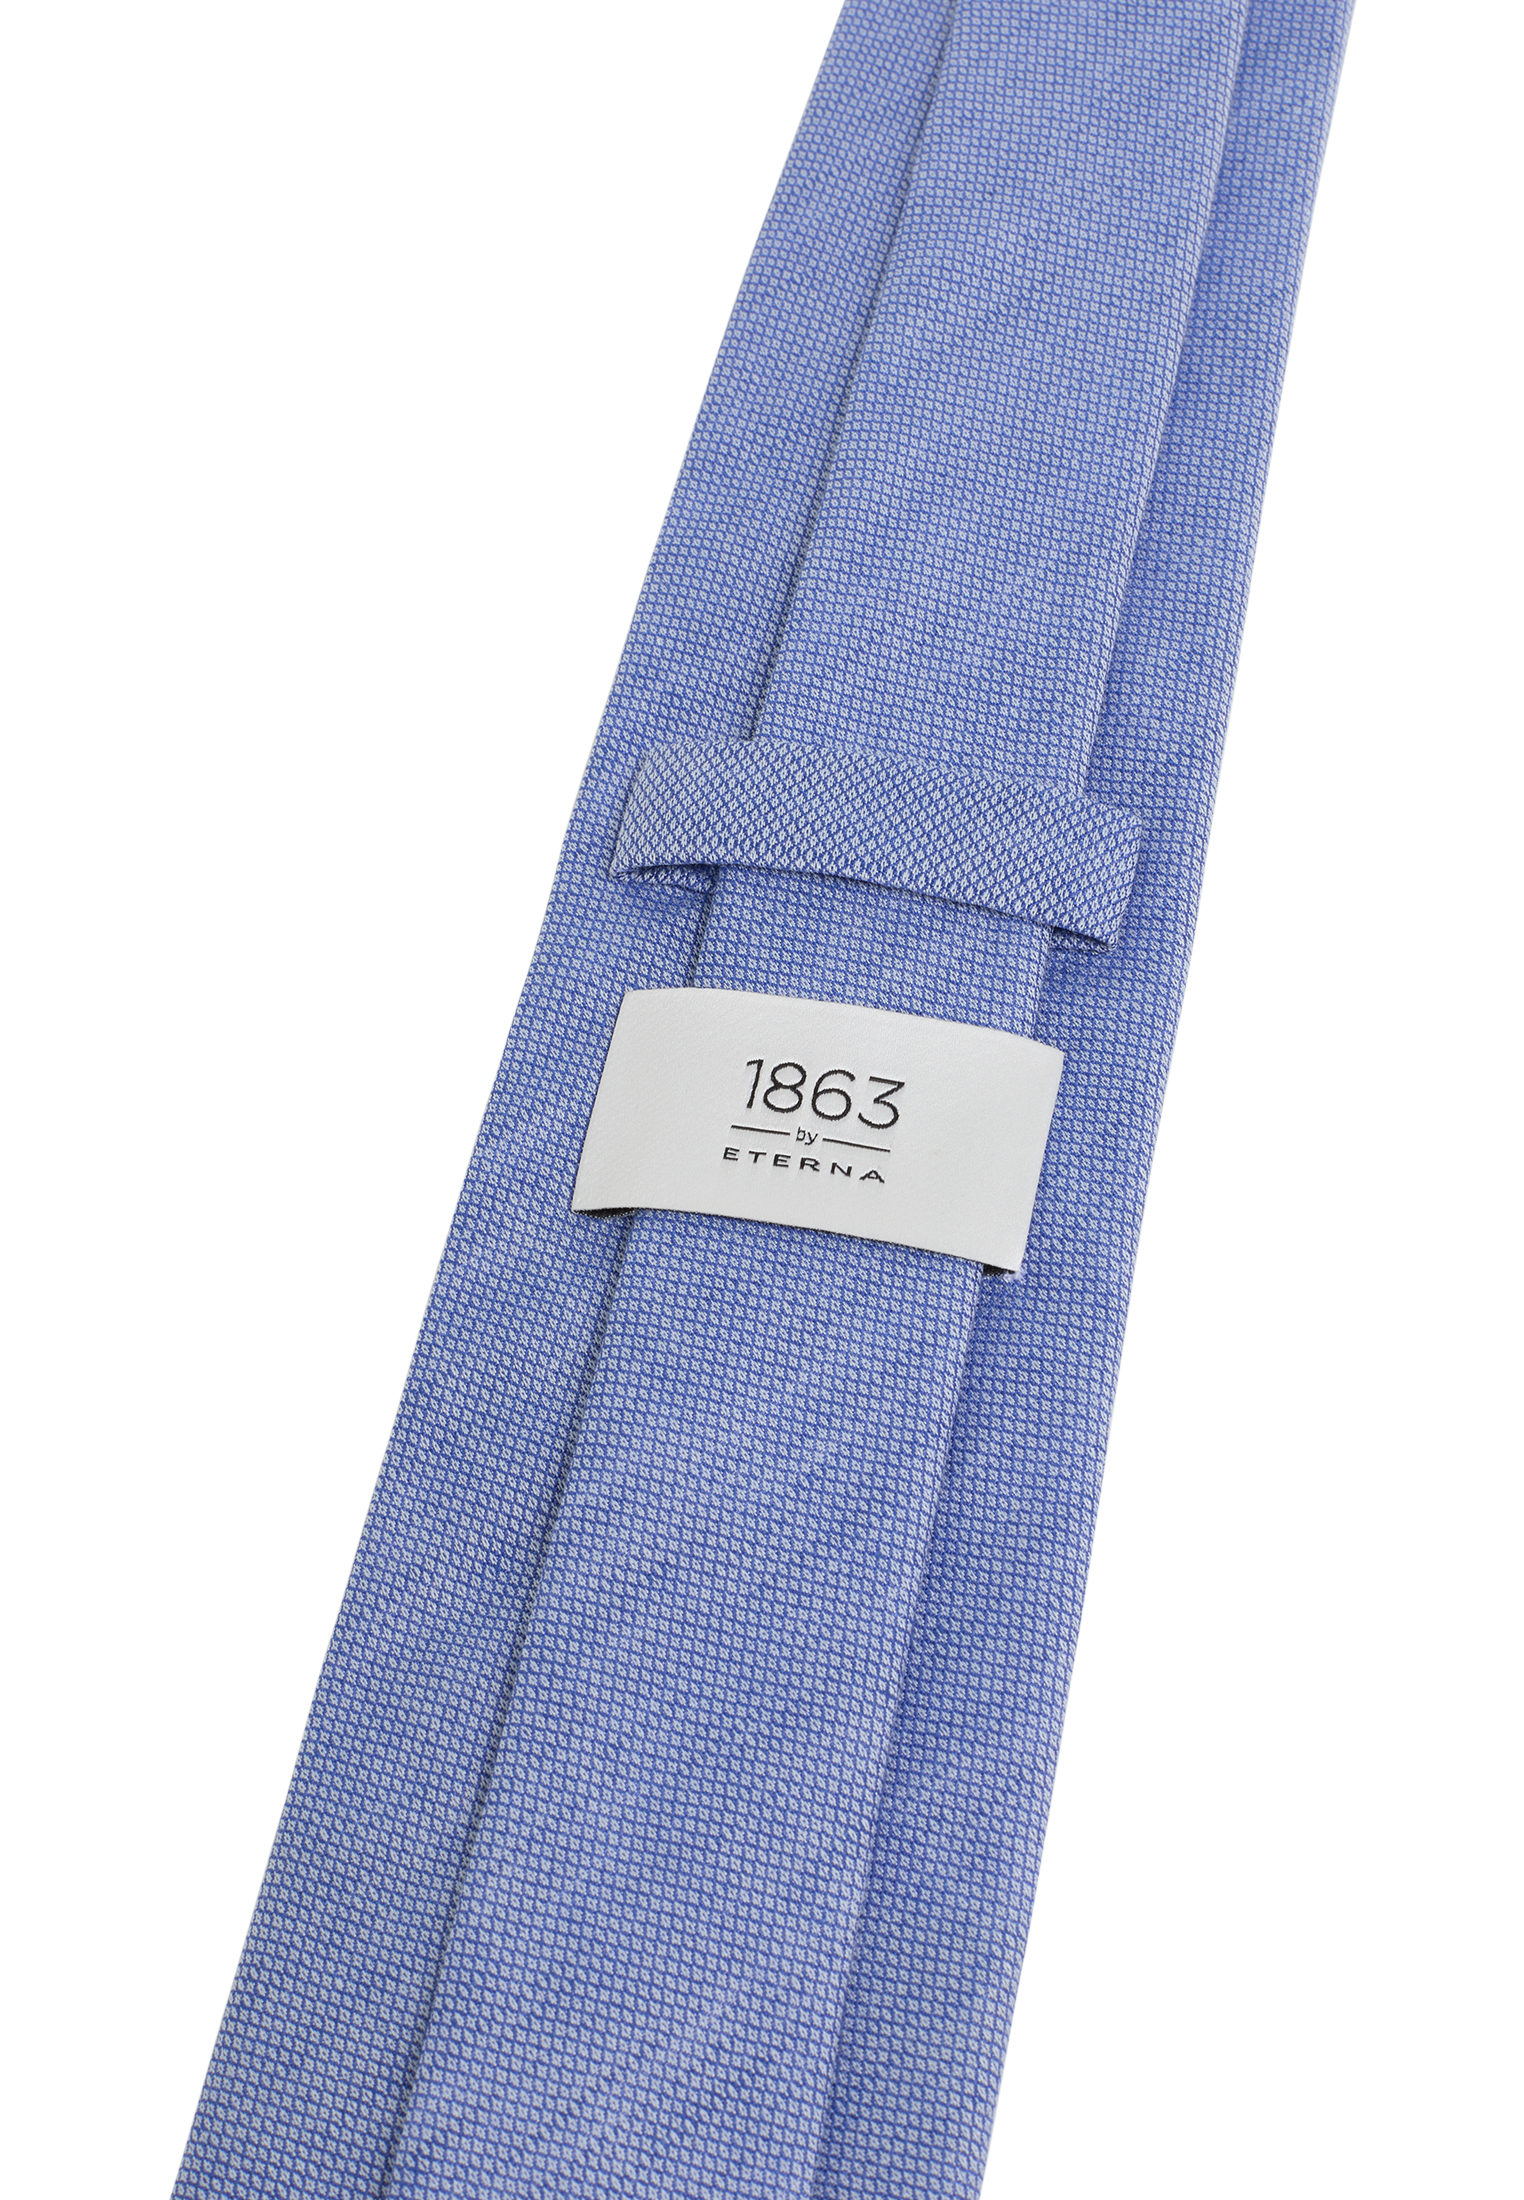 Krawatte | royal | 142 blau 1AC01950-01-51-142 | in royal strukturiert blau